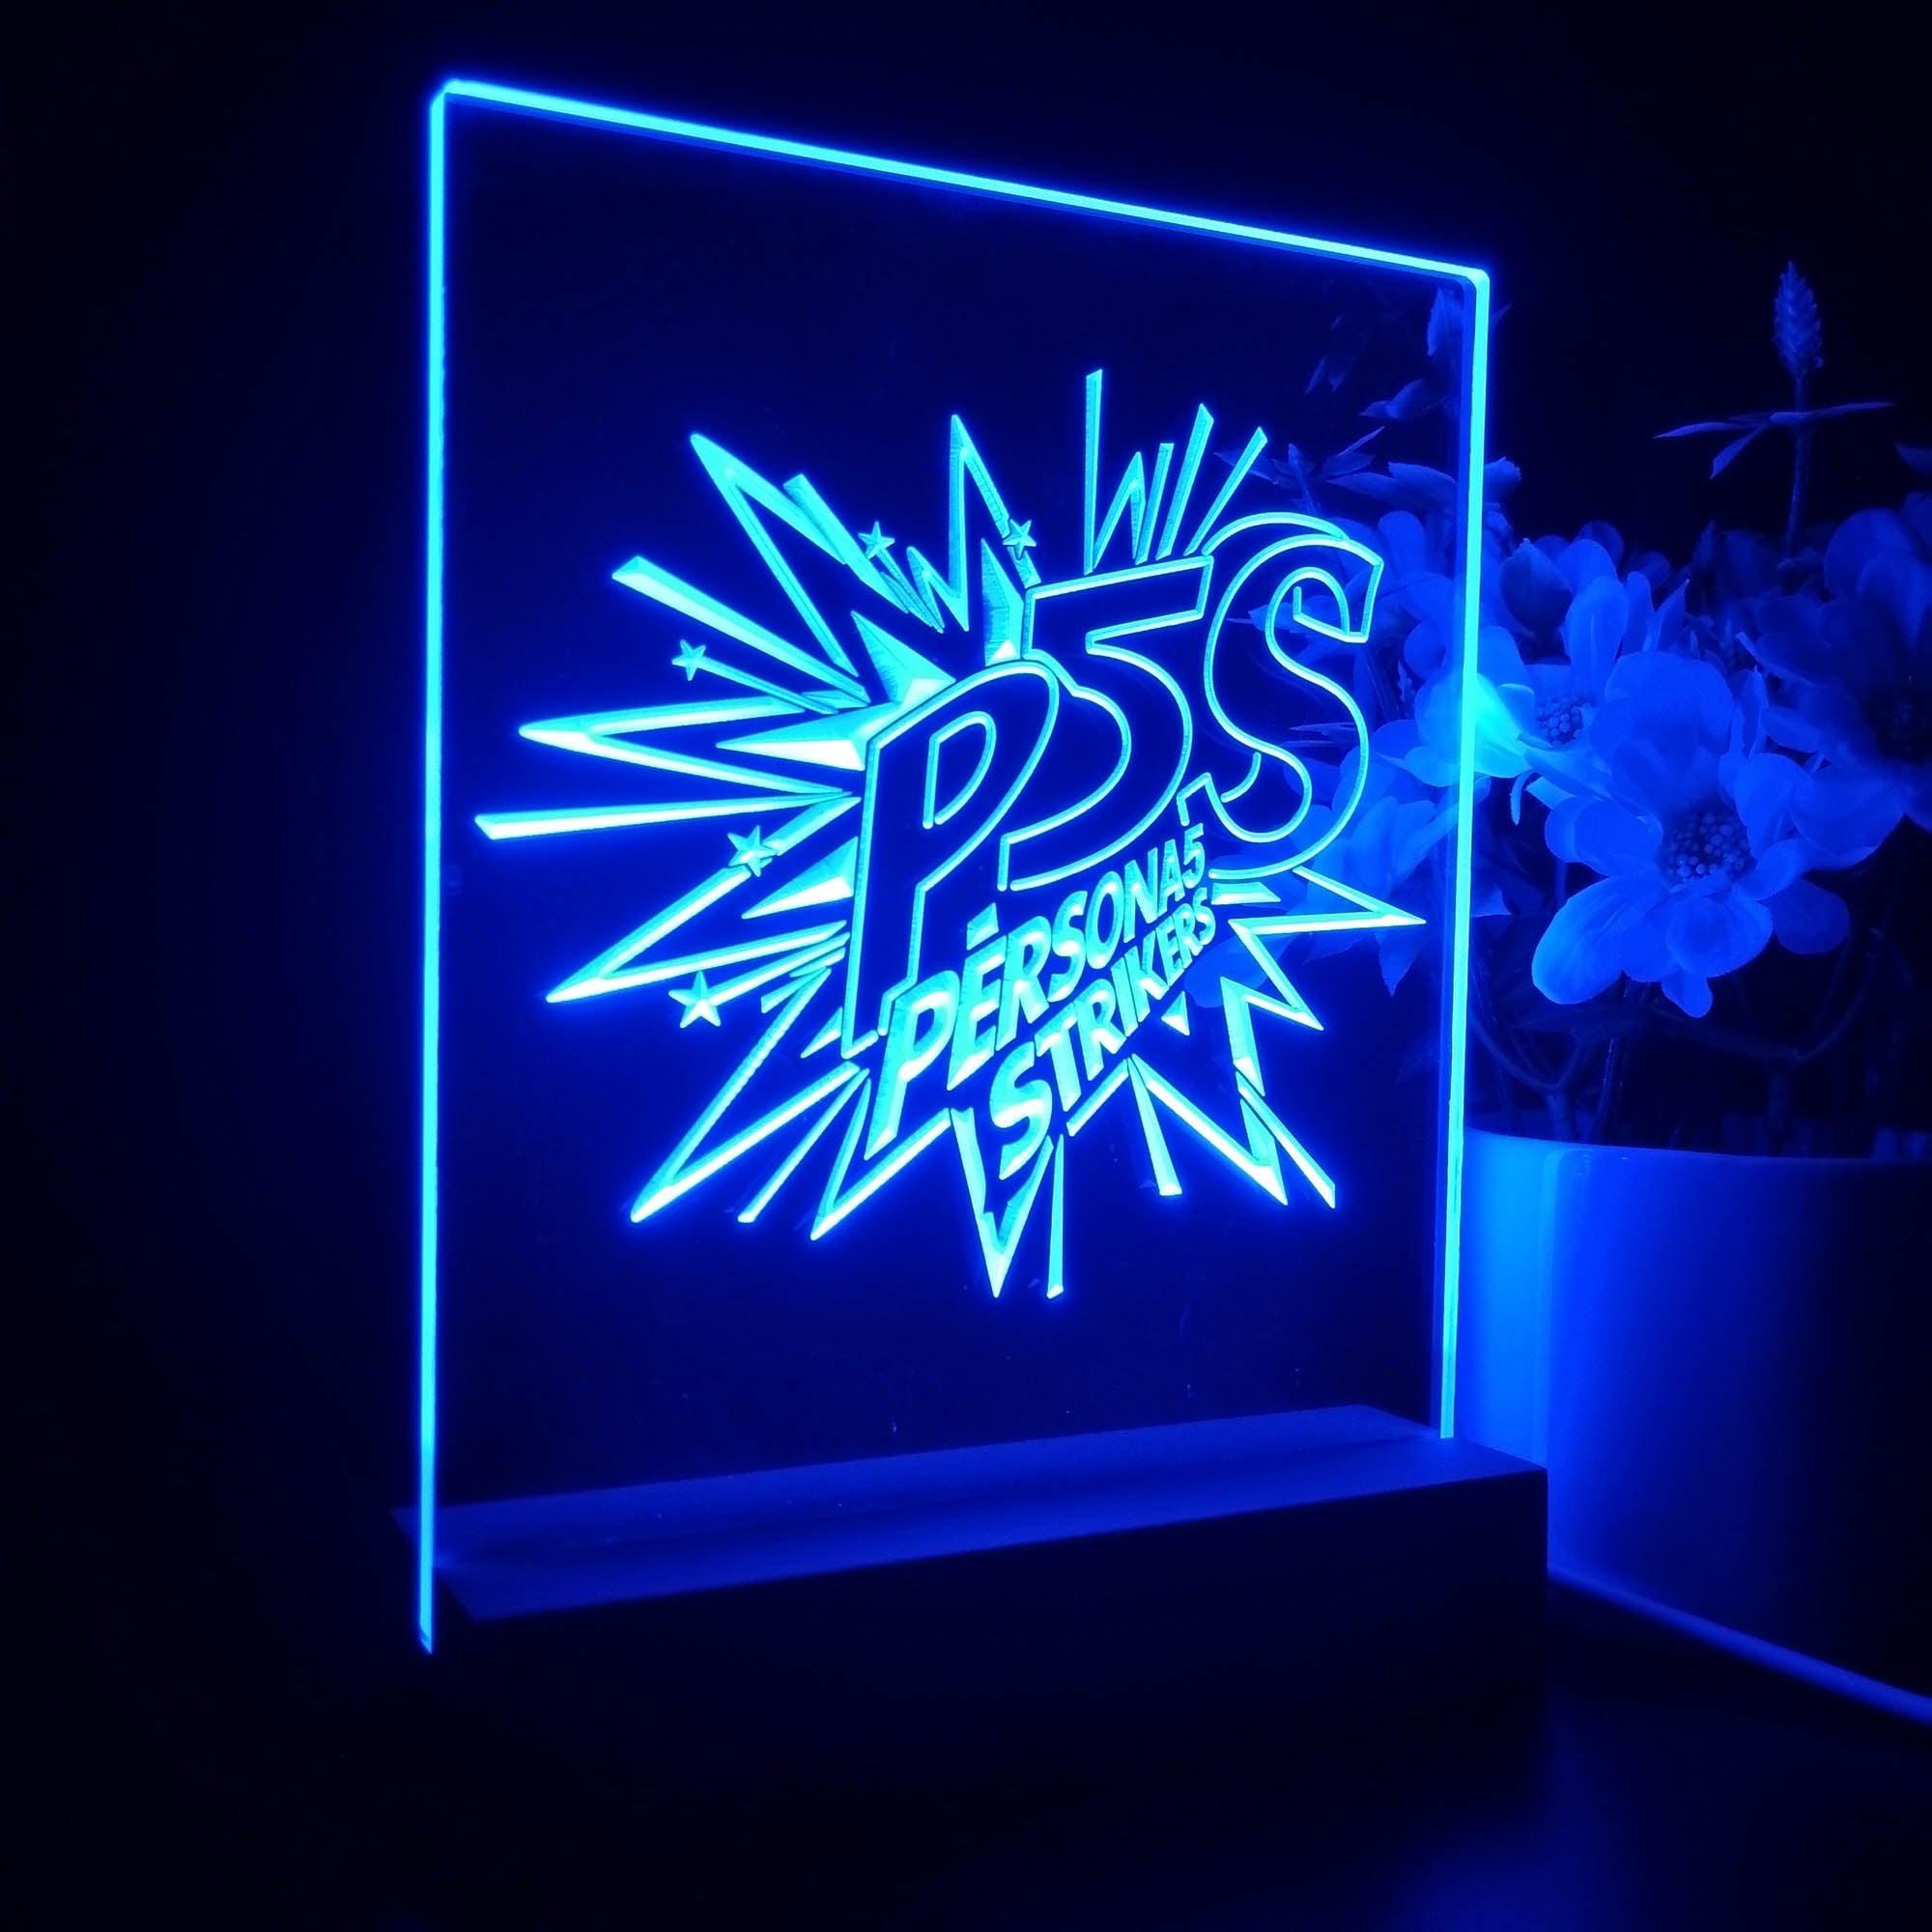 Persona 5 Strikers Game Room LED Sign Lamp Display